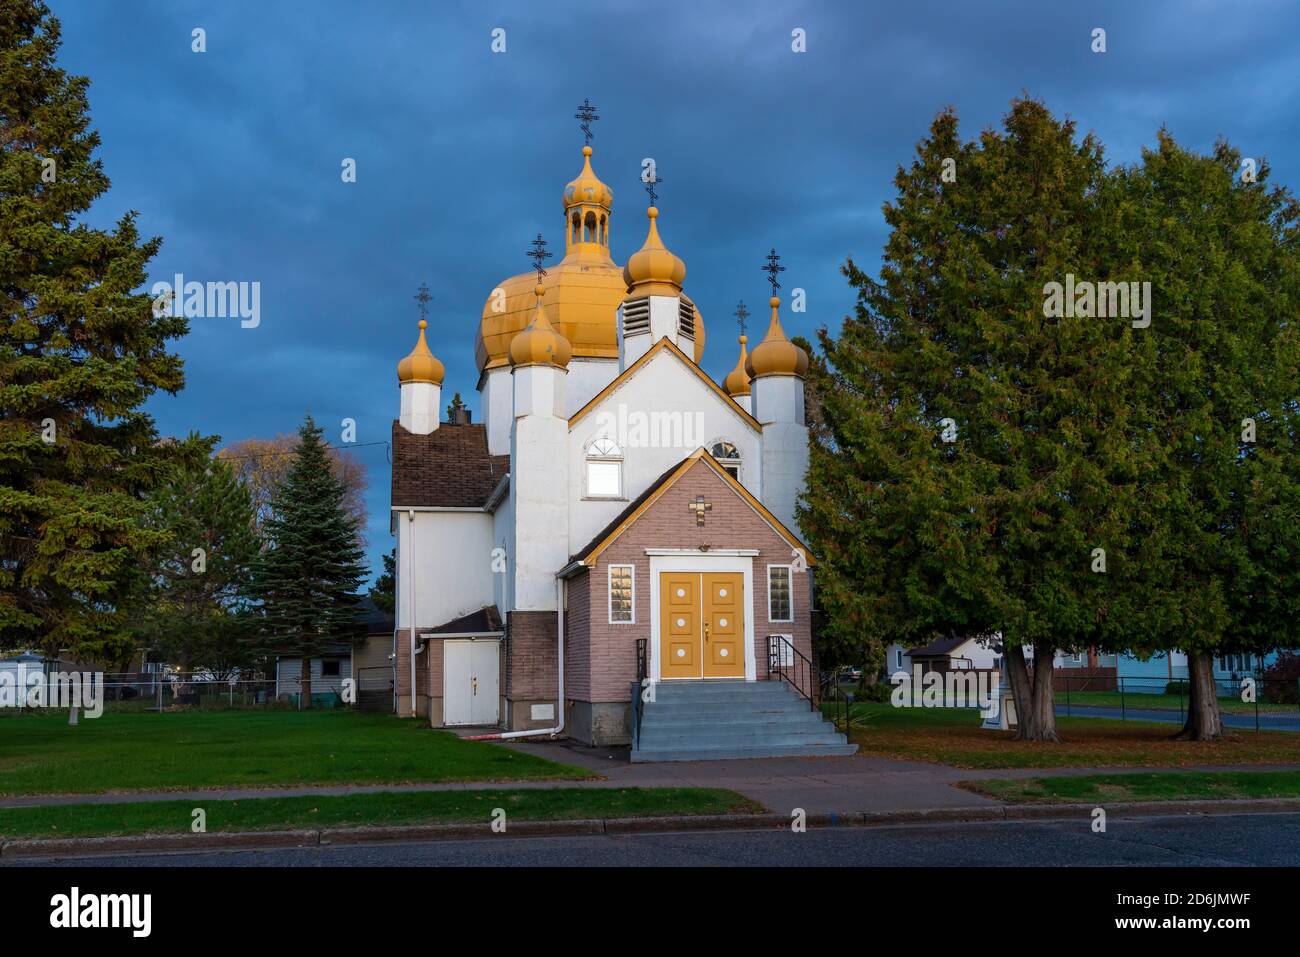 The Ukrainian Orthodox Church Manxe in Fort Frances, Ontario, Canada. Stock Photo